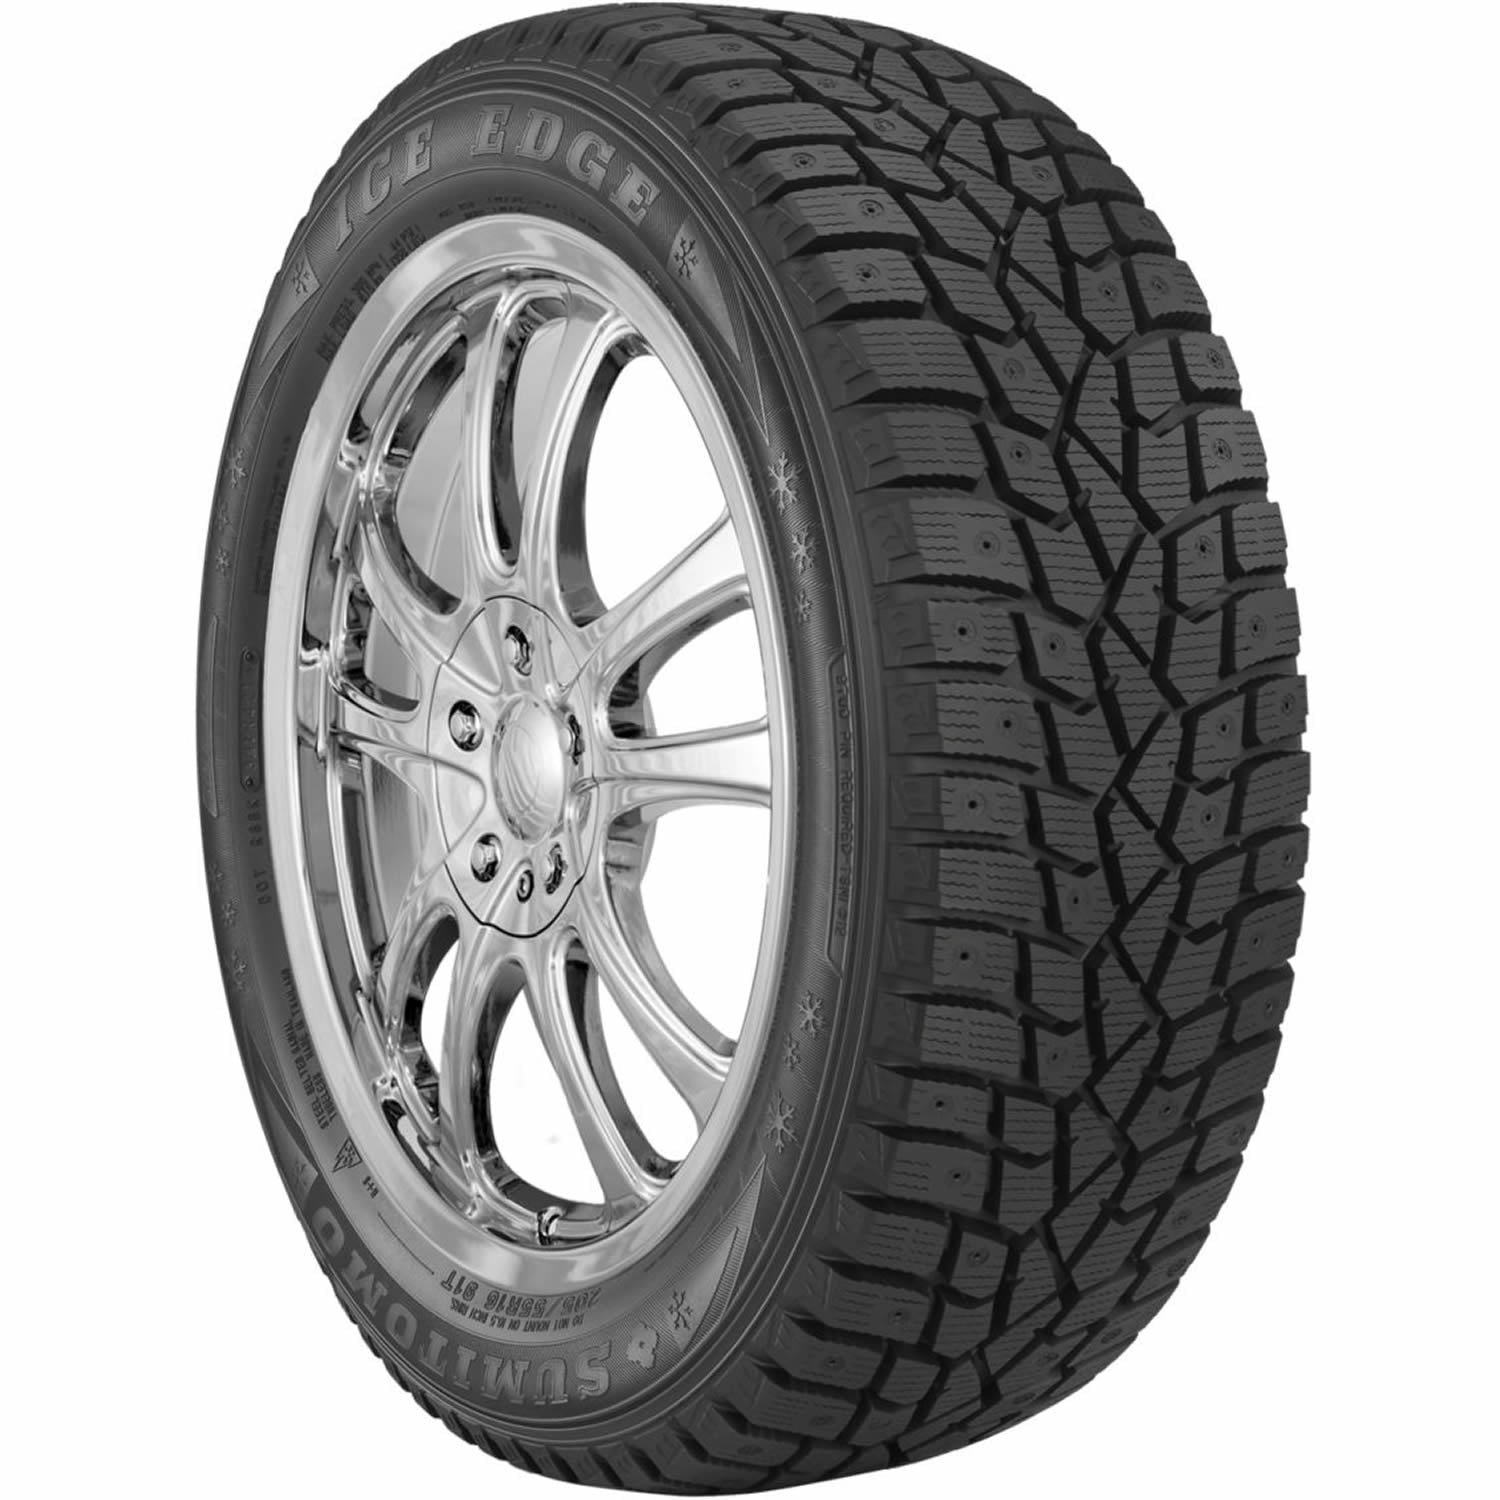 SUMITOMO ICE EDGE 205/65R15 (25.6X8.2R 15) Tires